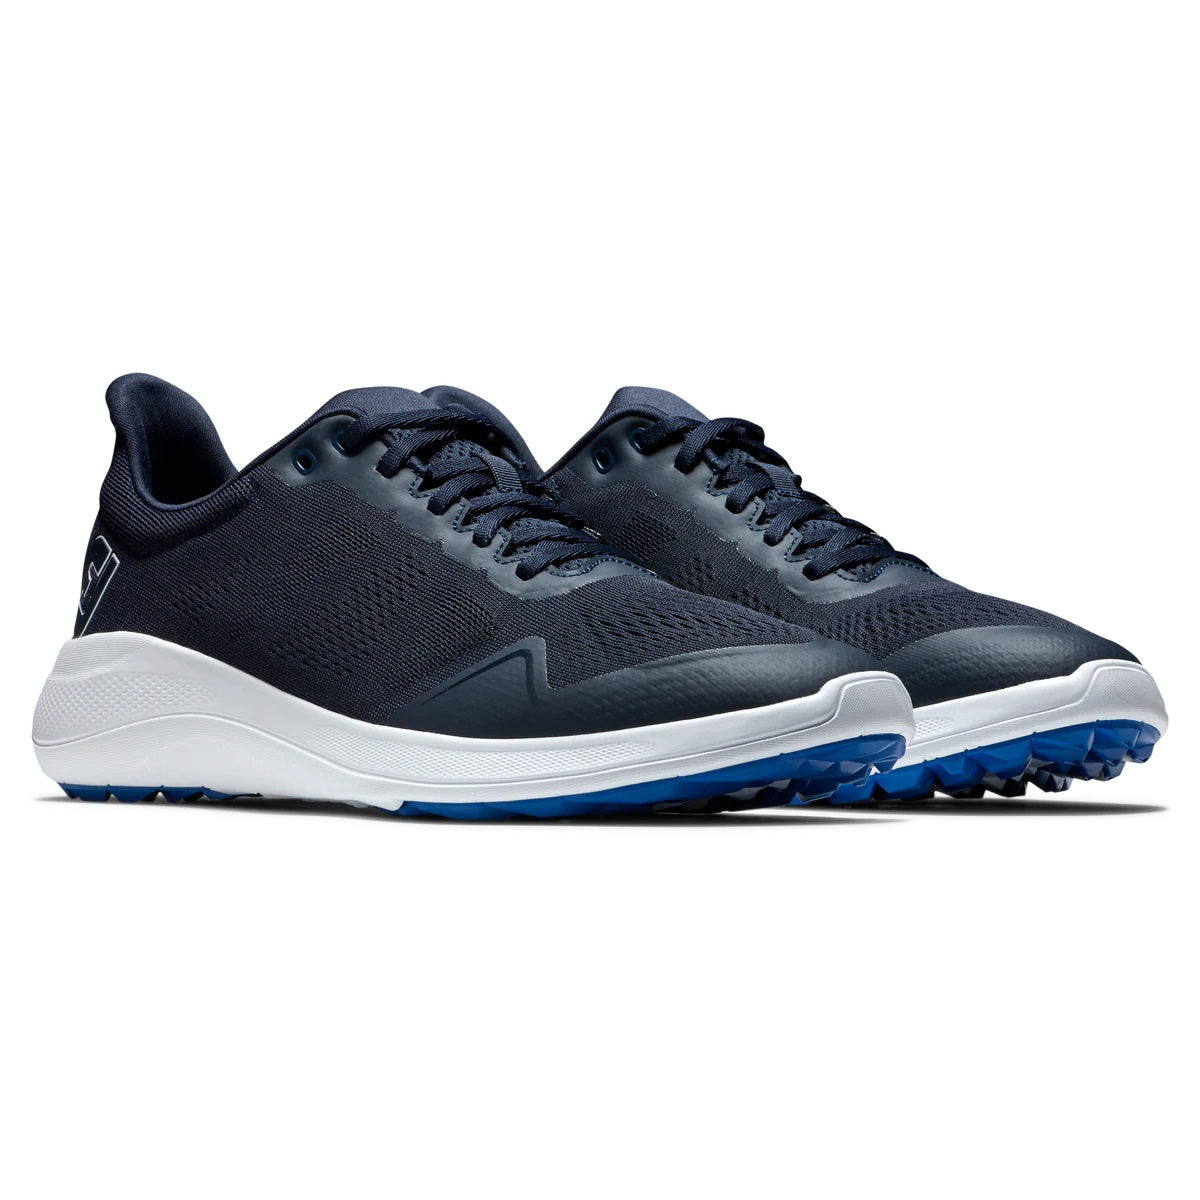 FootJoy Flex Golf Shoes Navy/White/Blue 56140 (Previous Season Style)